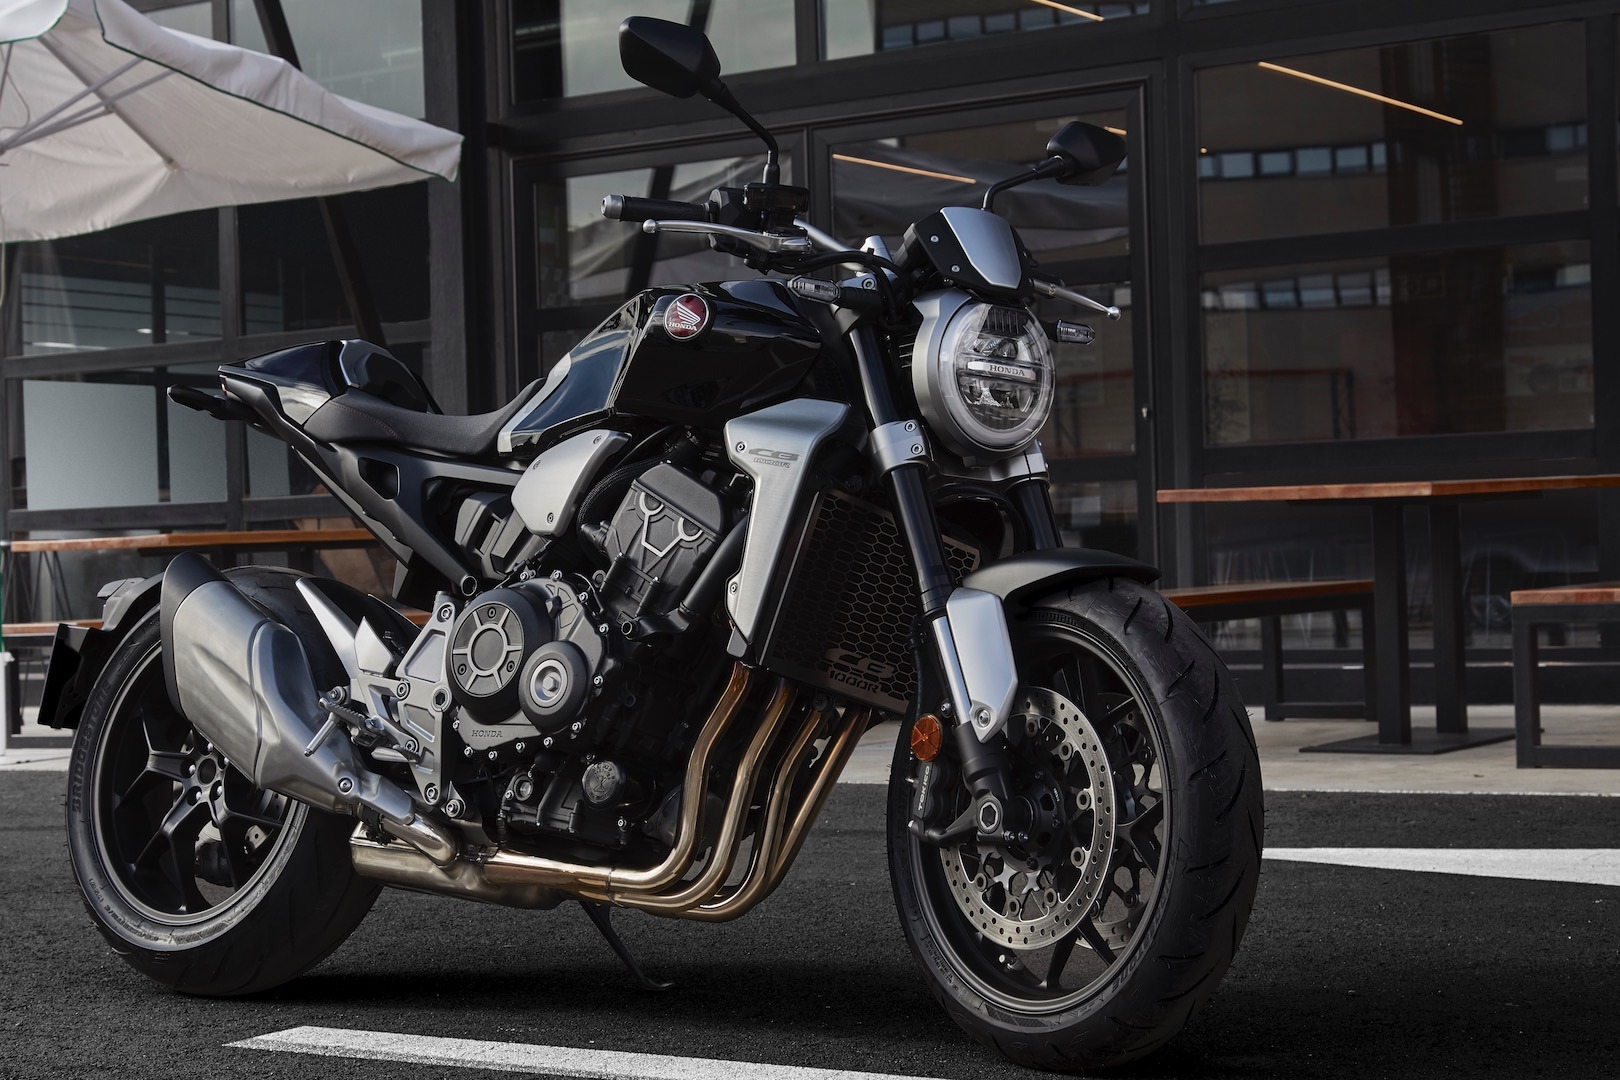 2018-Honda-CB1000R-First-Look-naked-sport-motorcycle-8.jpg